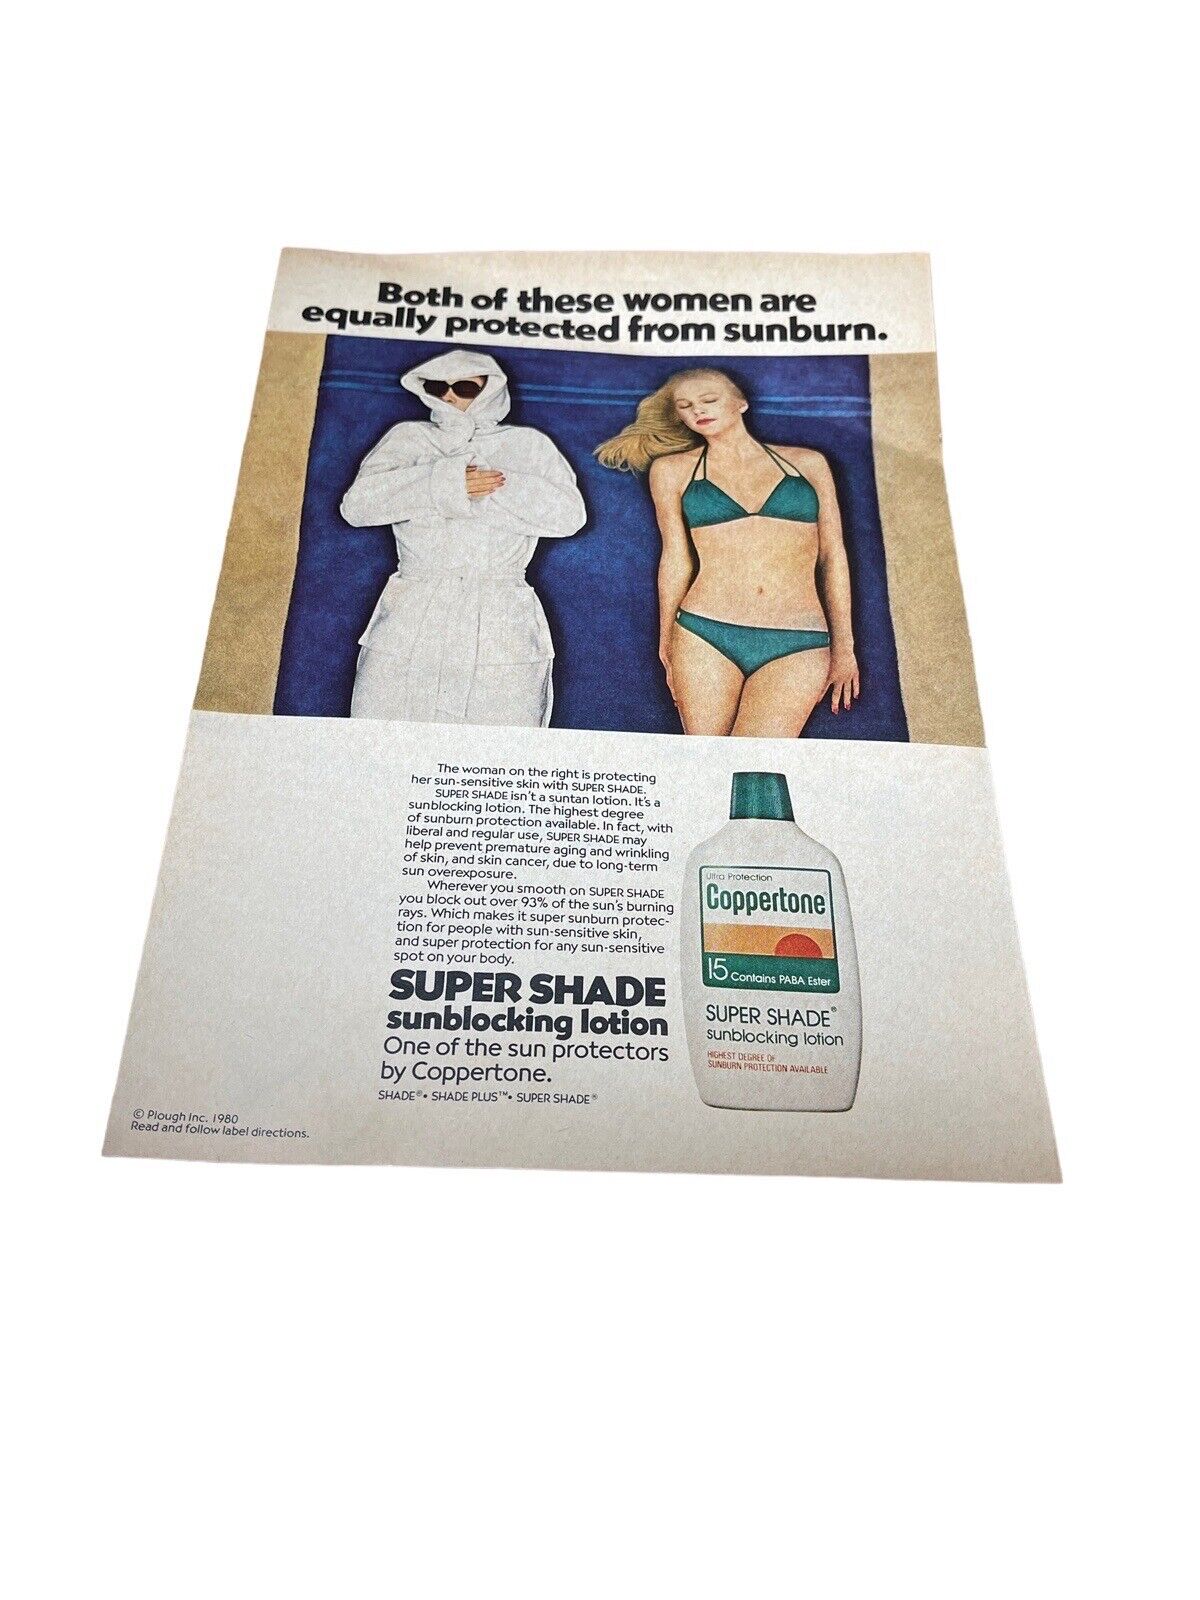 1980 Coppertone super shade Sunblocking suntan lotion two women ad